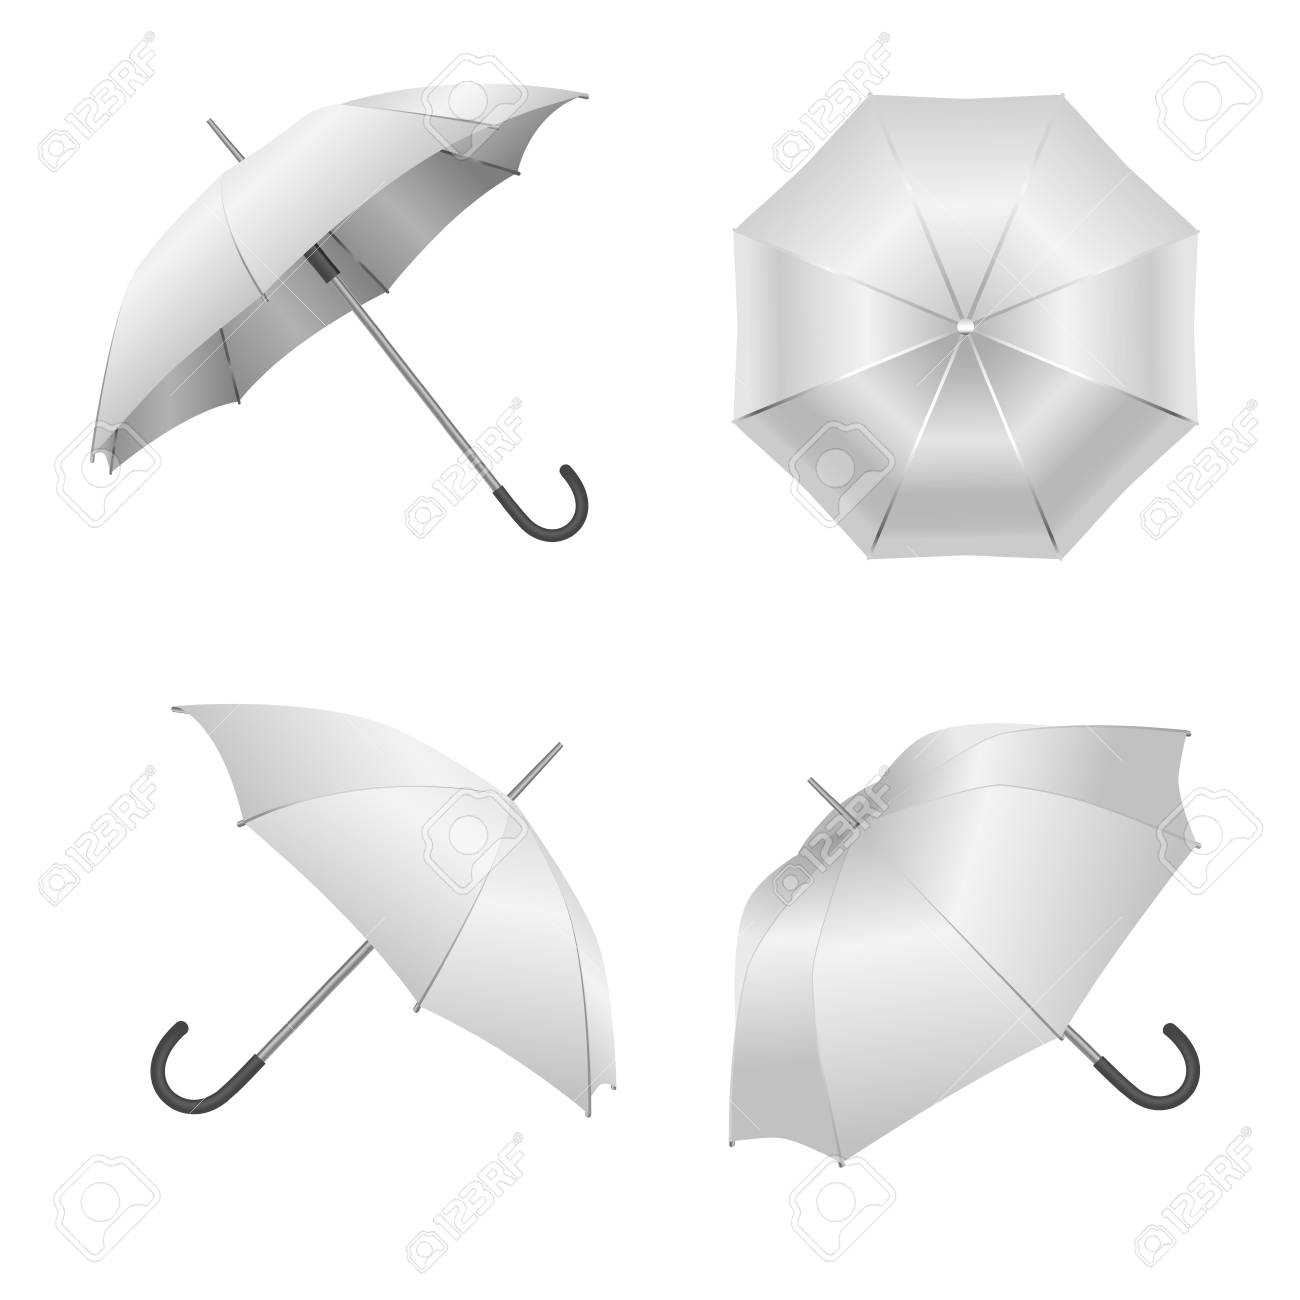 Realistic Detailed 3D White Blank Umbrella Template Mockup Set.. For Blank Umbrella Template